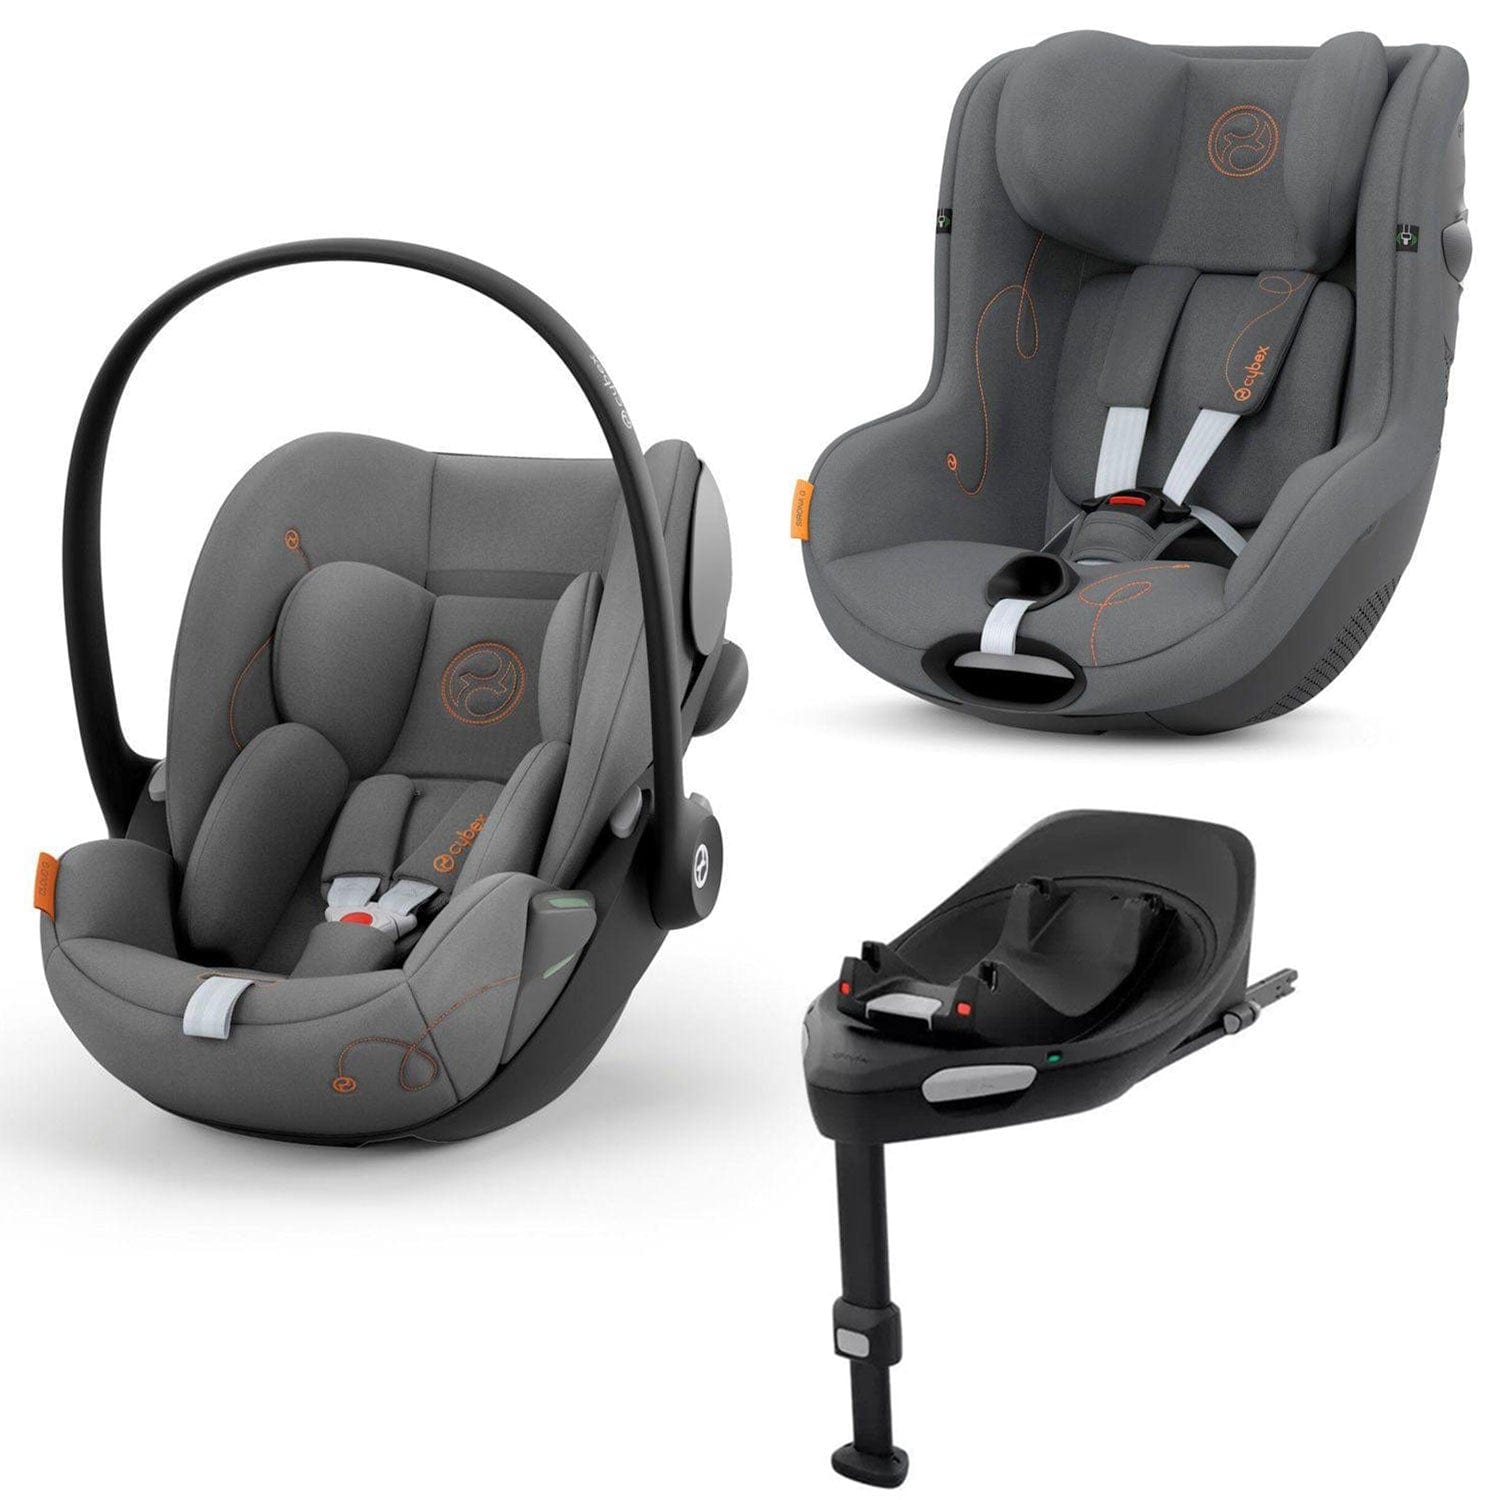 Cybex G Car Seat Bundle in Lava Grey Baby Car Seats 15302-LAV-GRY 4063846431045